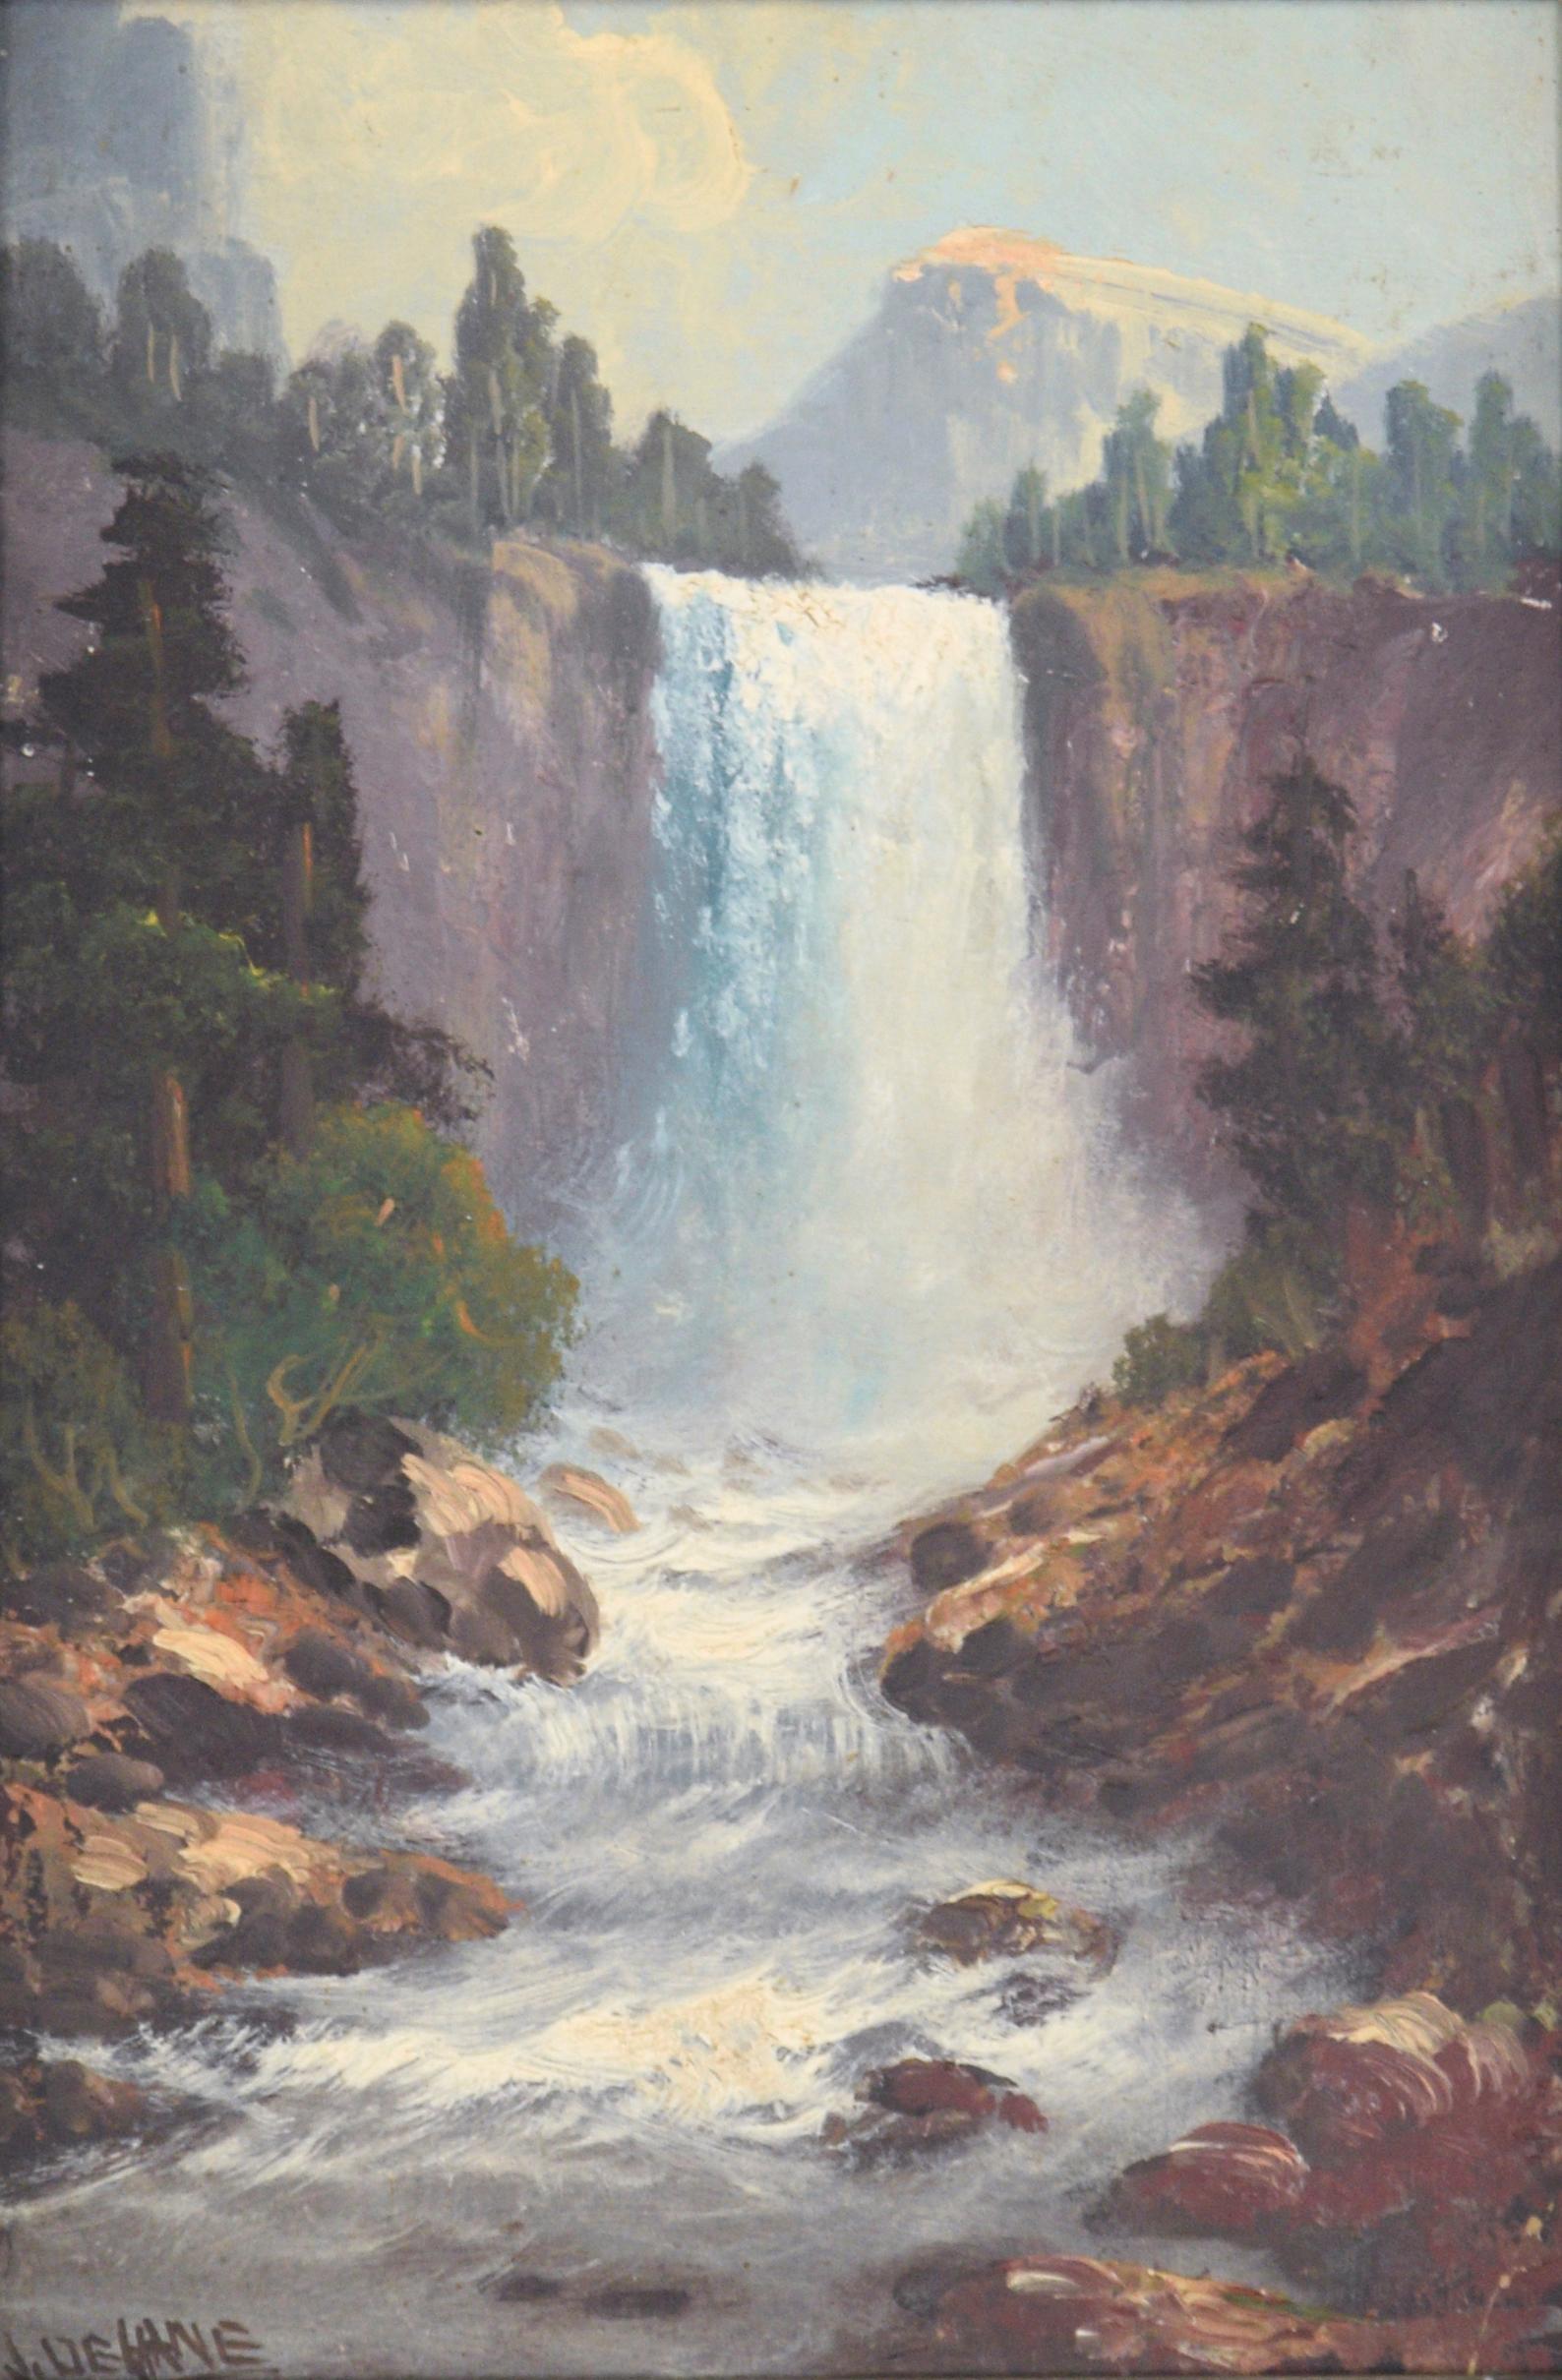 Vernal Falls - Yosemite Waterfall Landscape by John Englehart - Painting by John Joseph Englehart